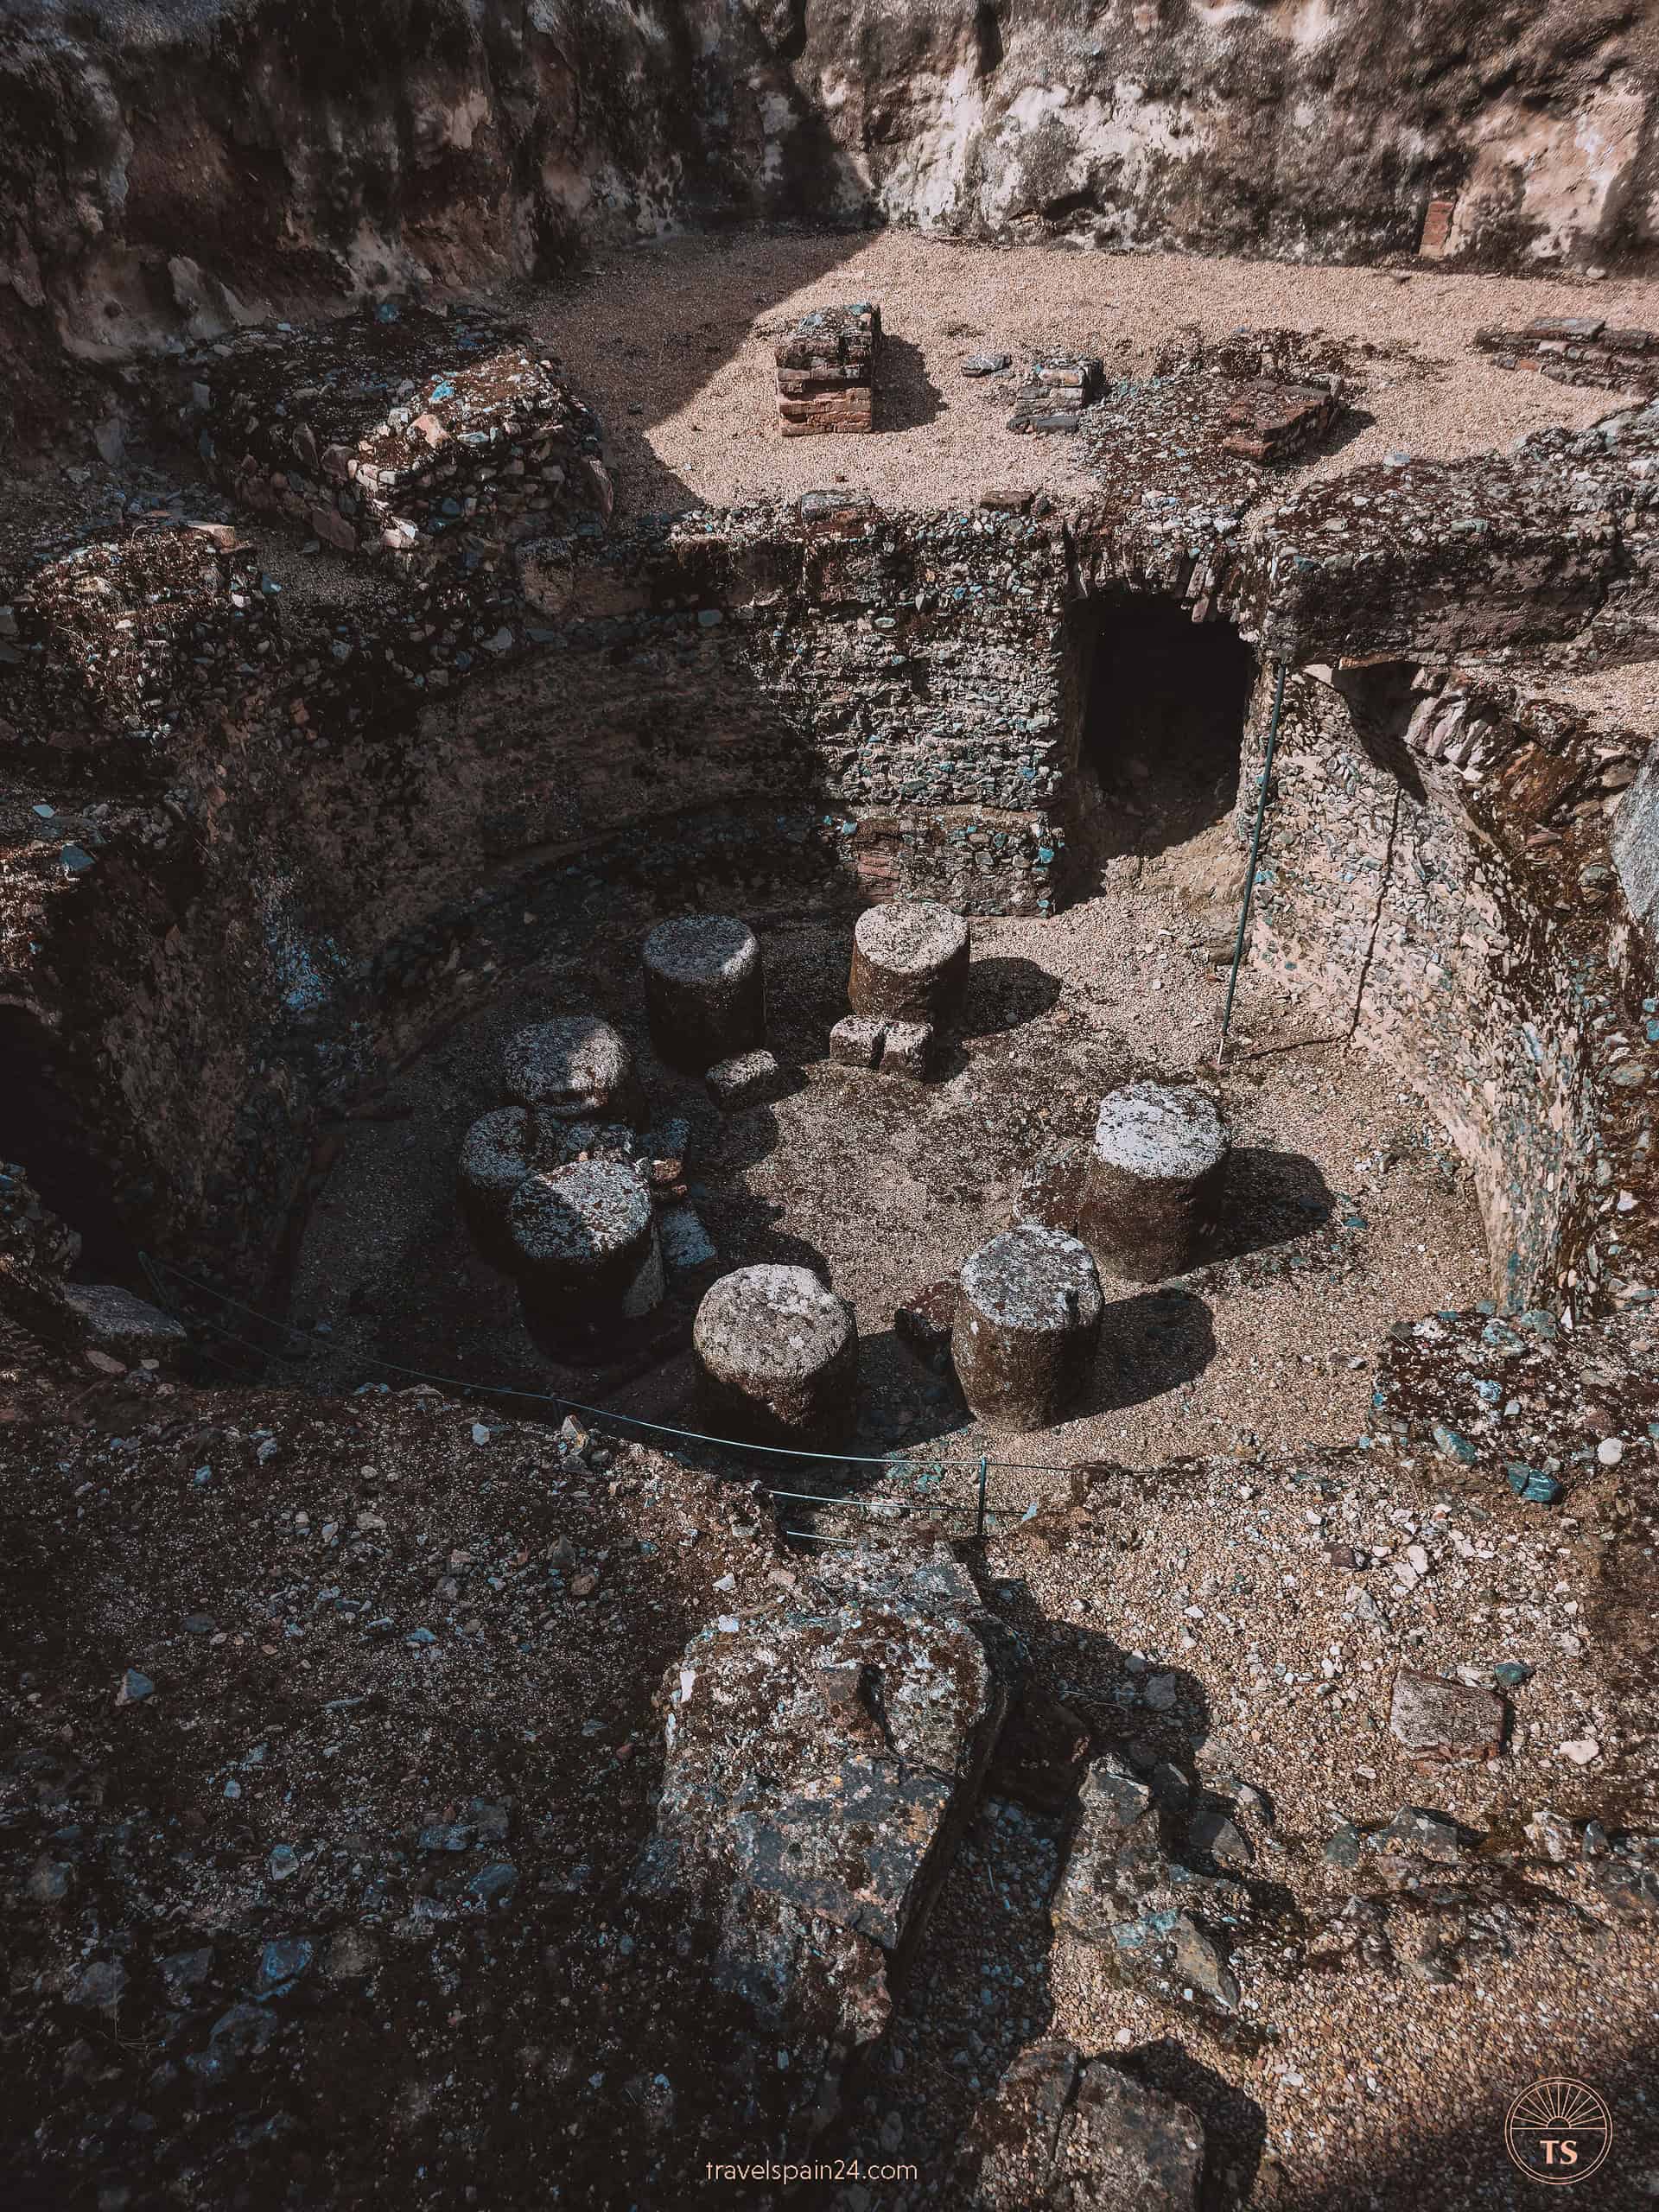 Ancient Termas Romanas de la Nieve in Mérida, featuring seven small stone pillars arranged in a circle, remnants of Roman baths.